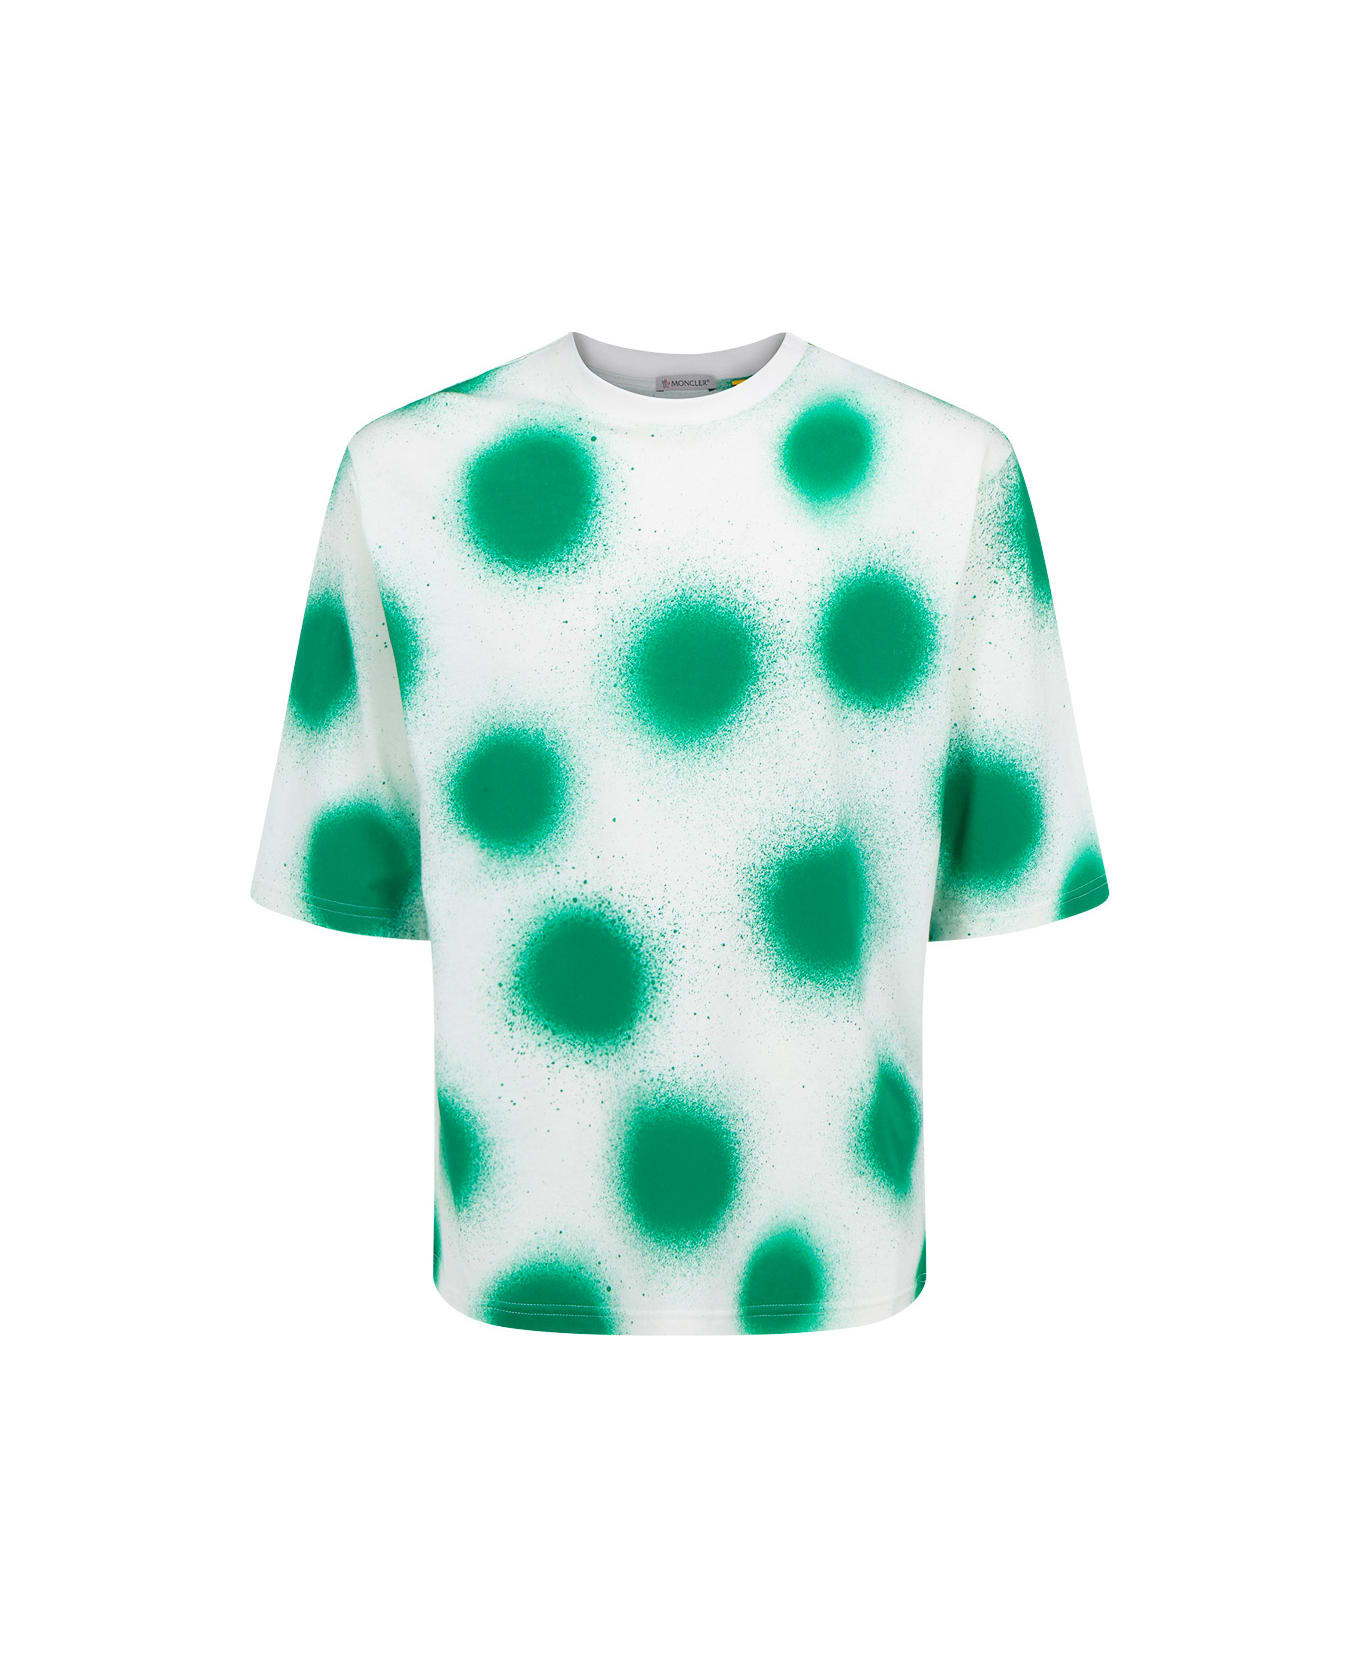 Moncler Genius T-shirt - Bianco/verde